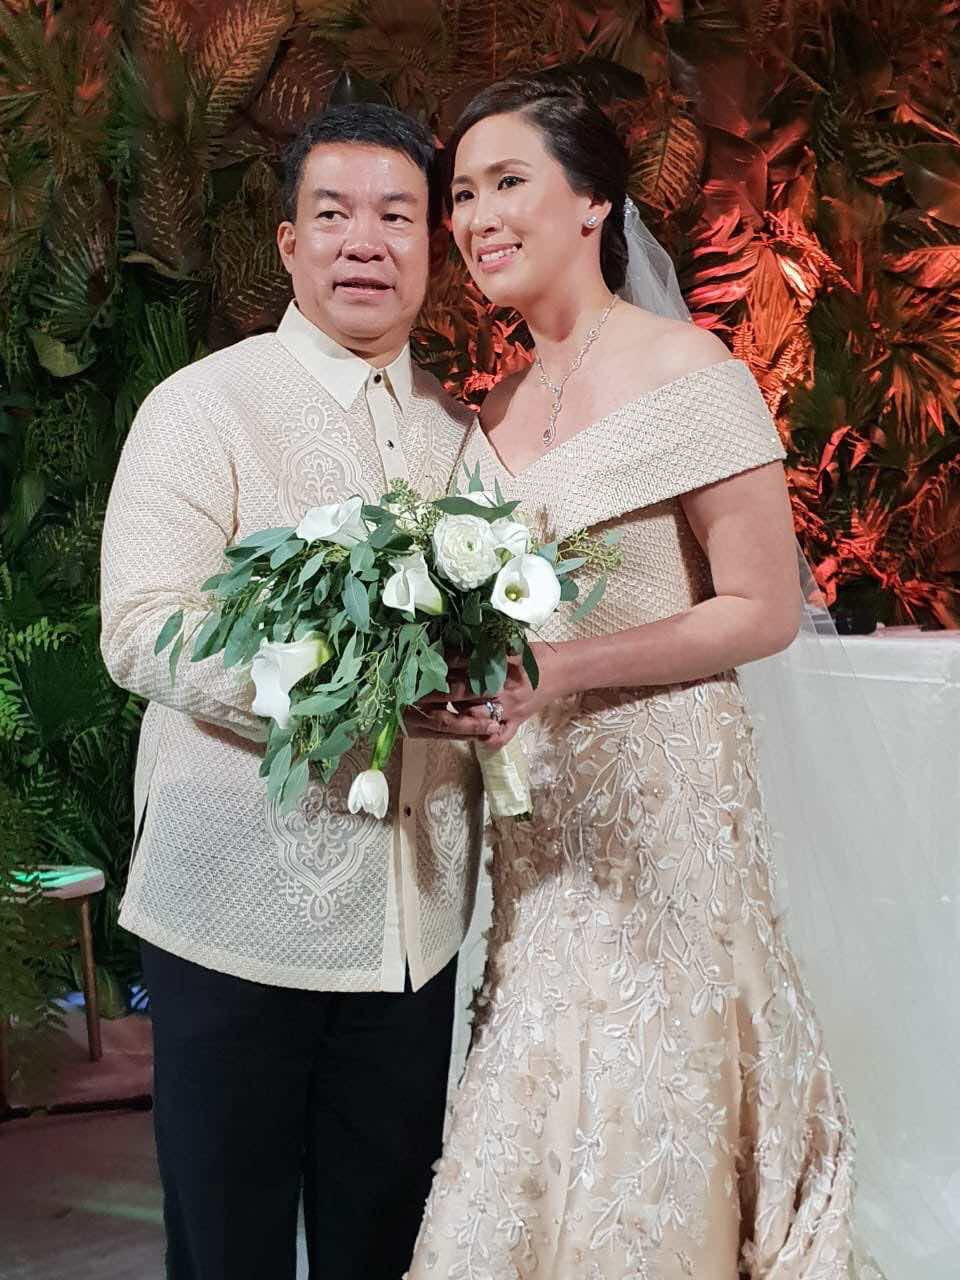 LOOK: 'Ninong' Duterte in Koko Pimentel, Kathryna Yu wedding